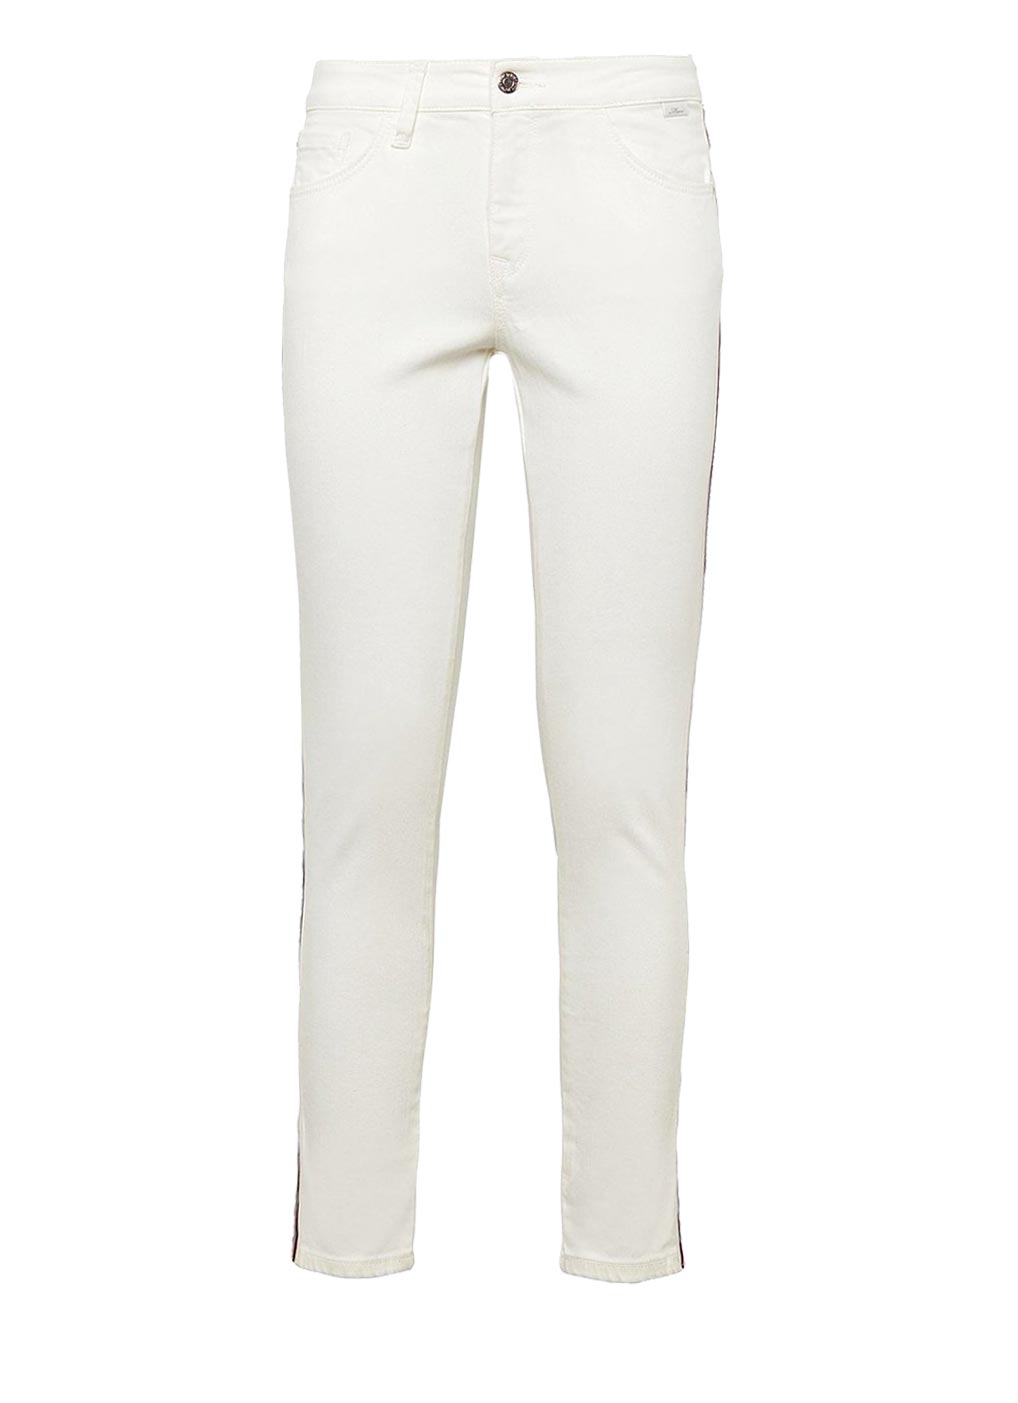 MAVI Damen Marken-Super-Skinny-Jeans, weiß, 30 inch